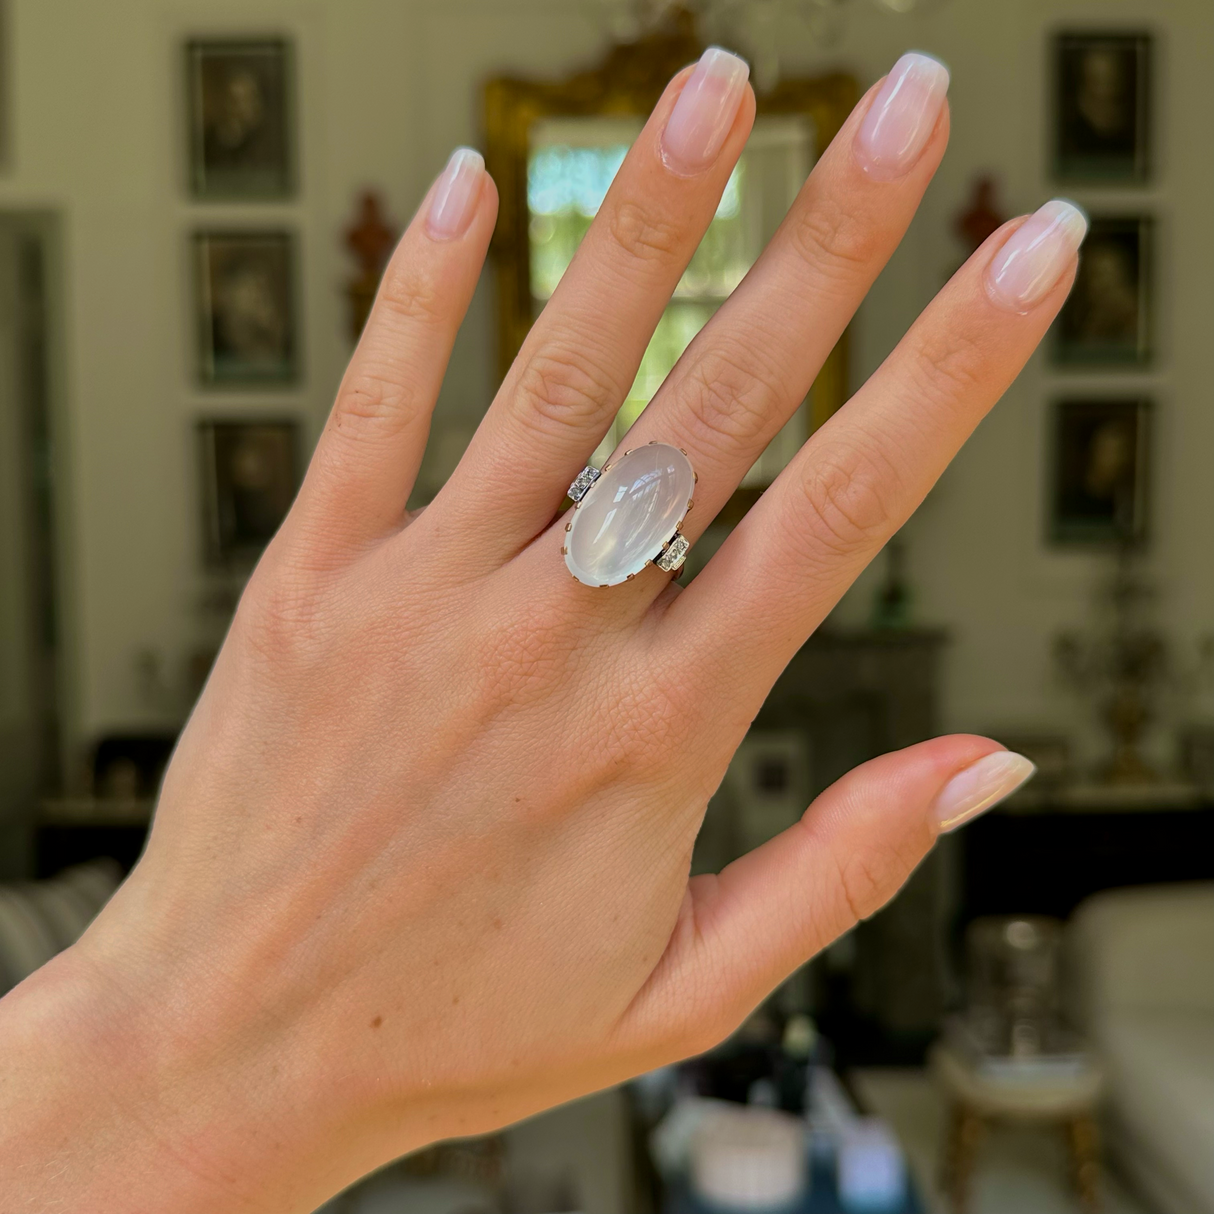 Moonstone and diamond ring, worn on hand. 